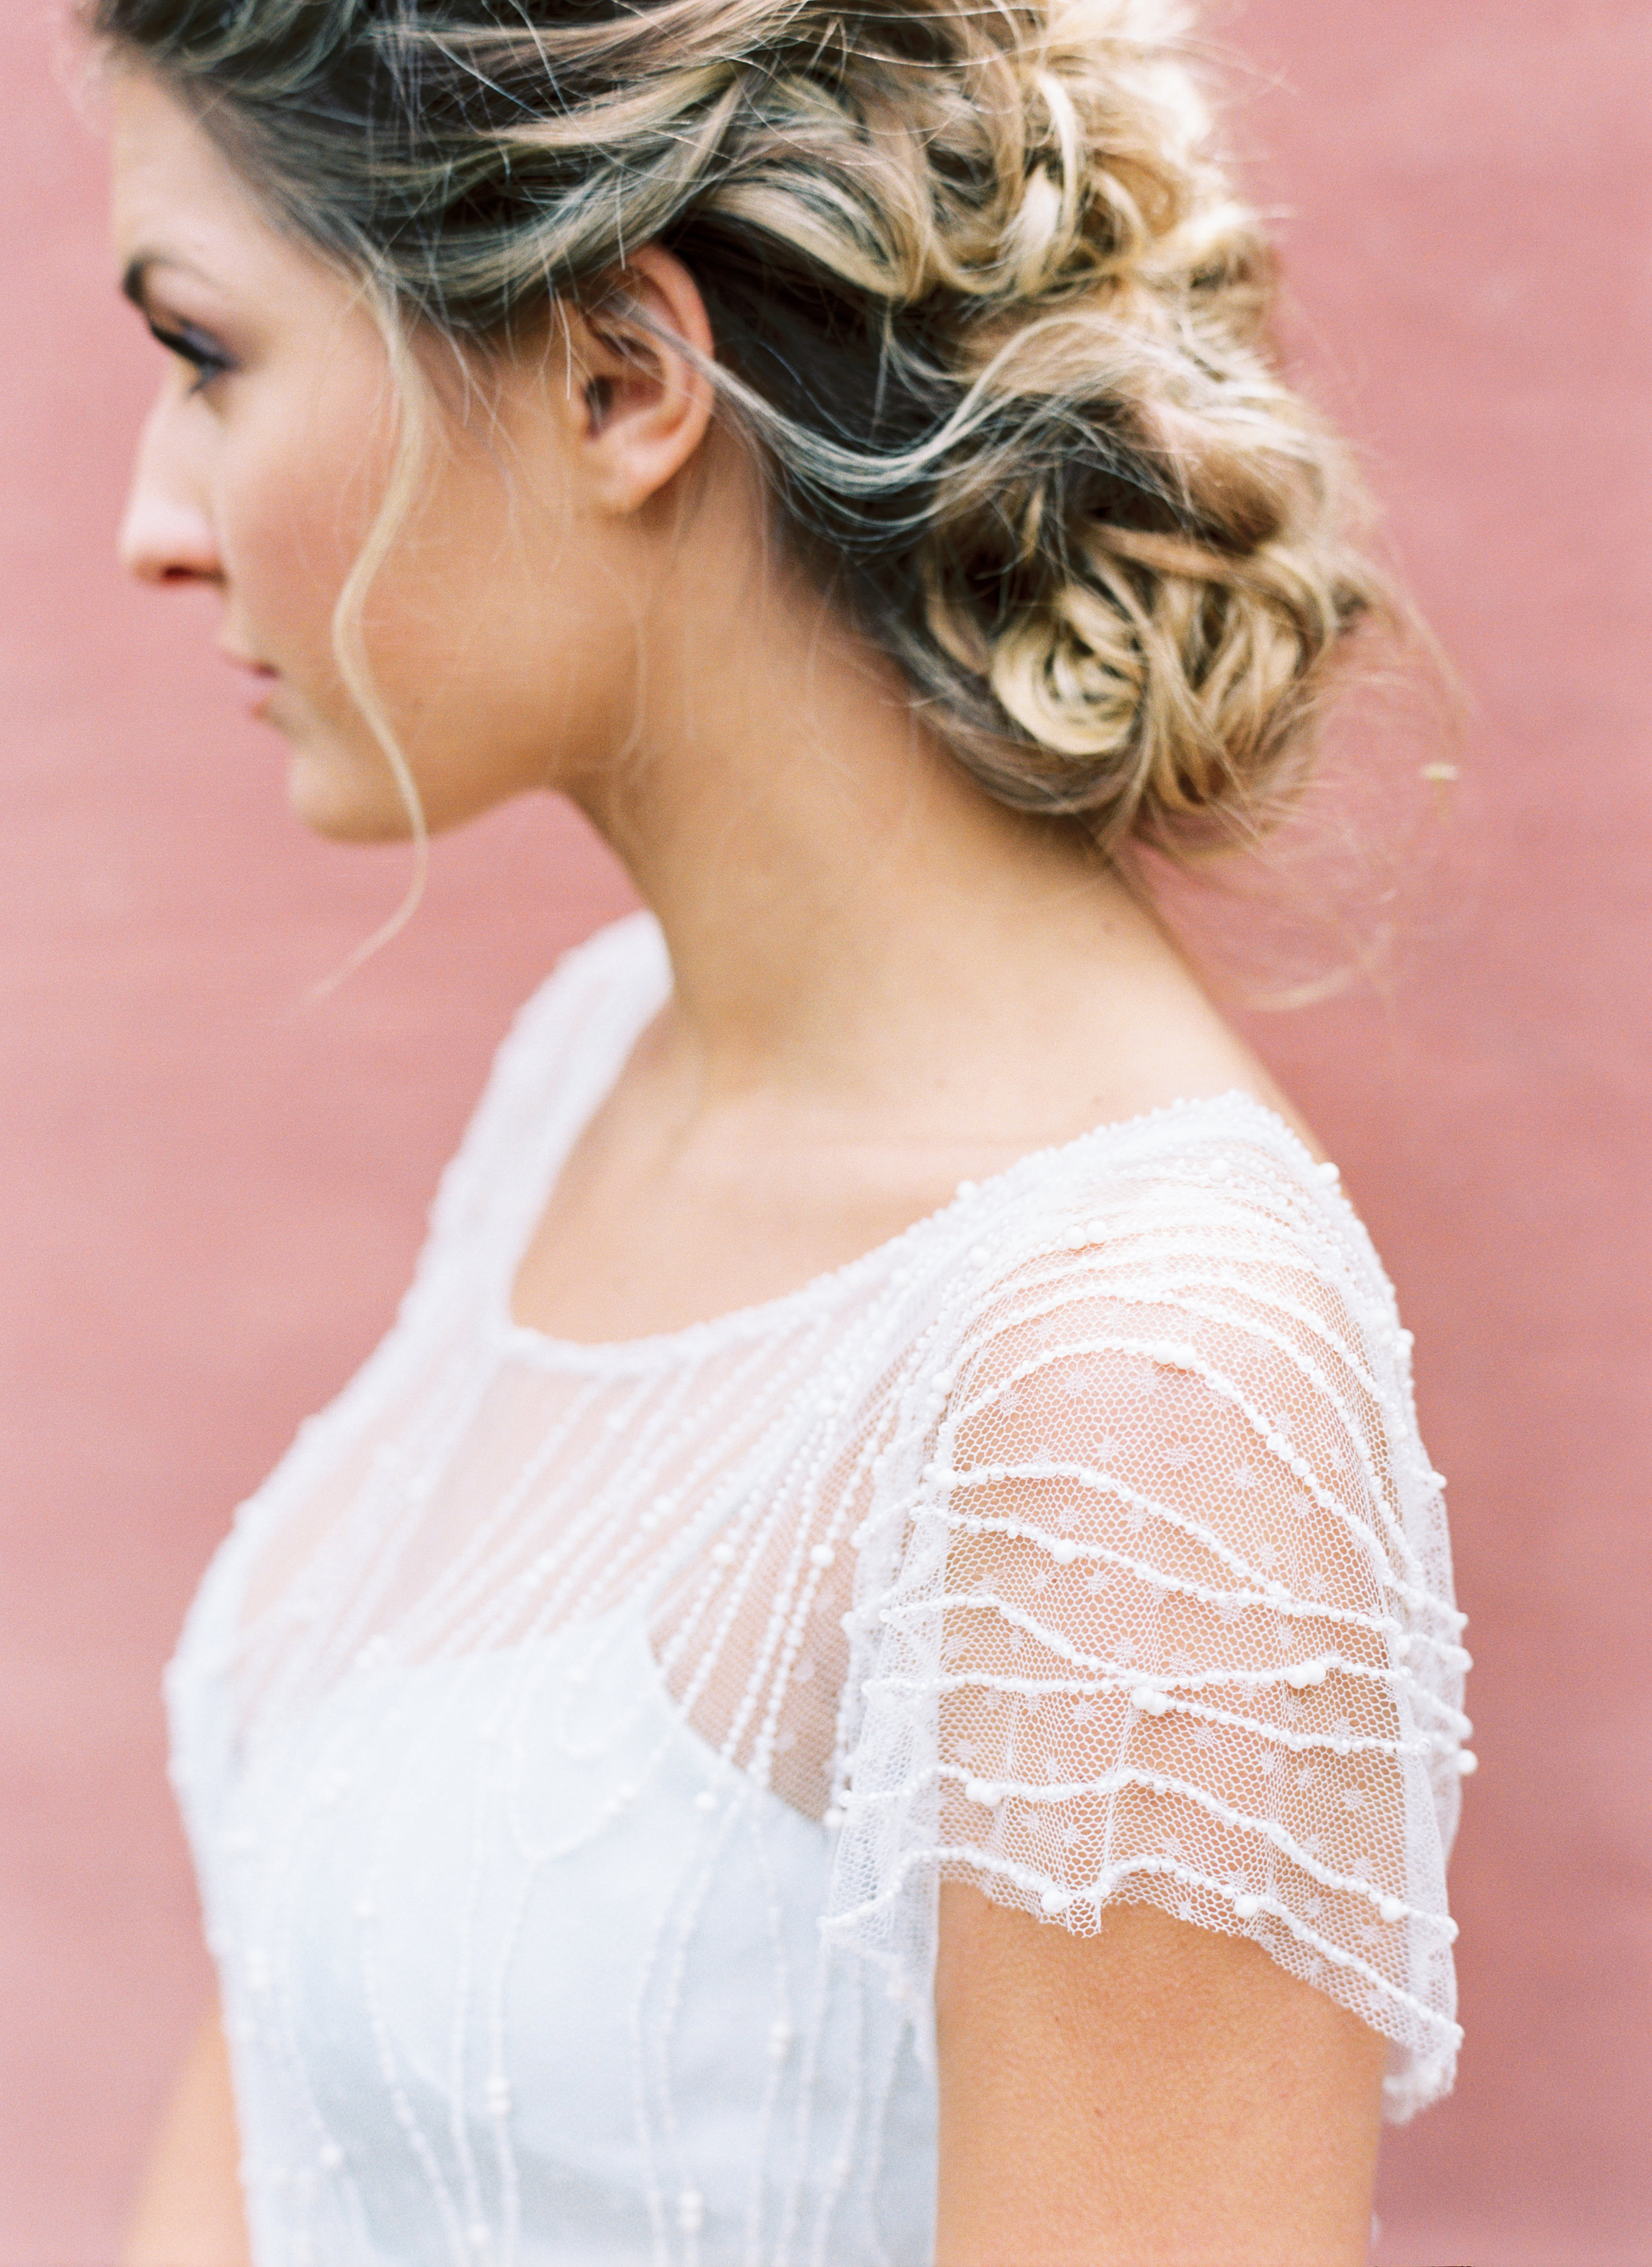 Pale blue wedding dress with lush, organic bridal bouquet. Nashville Wedding Florist.